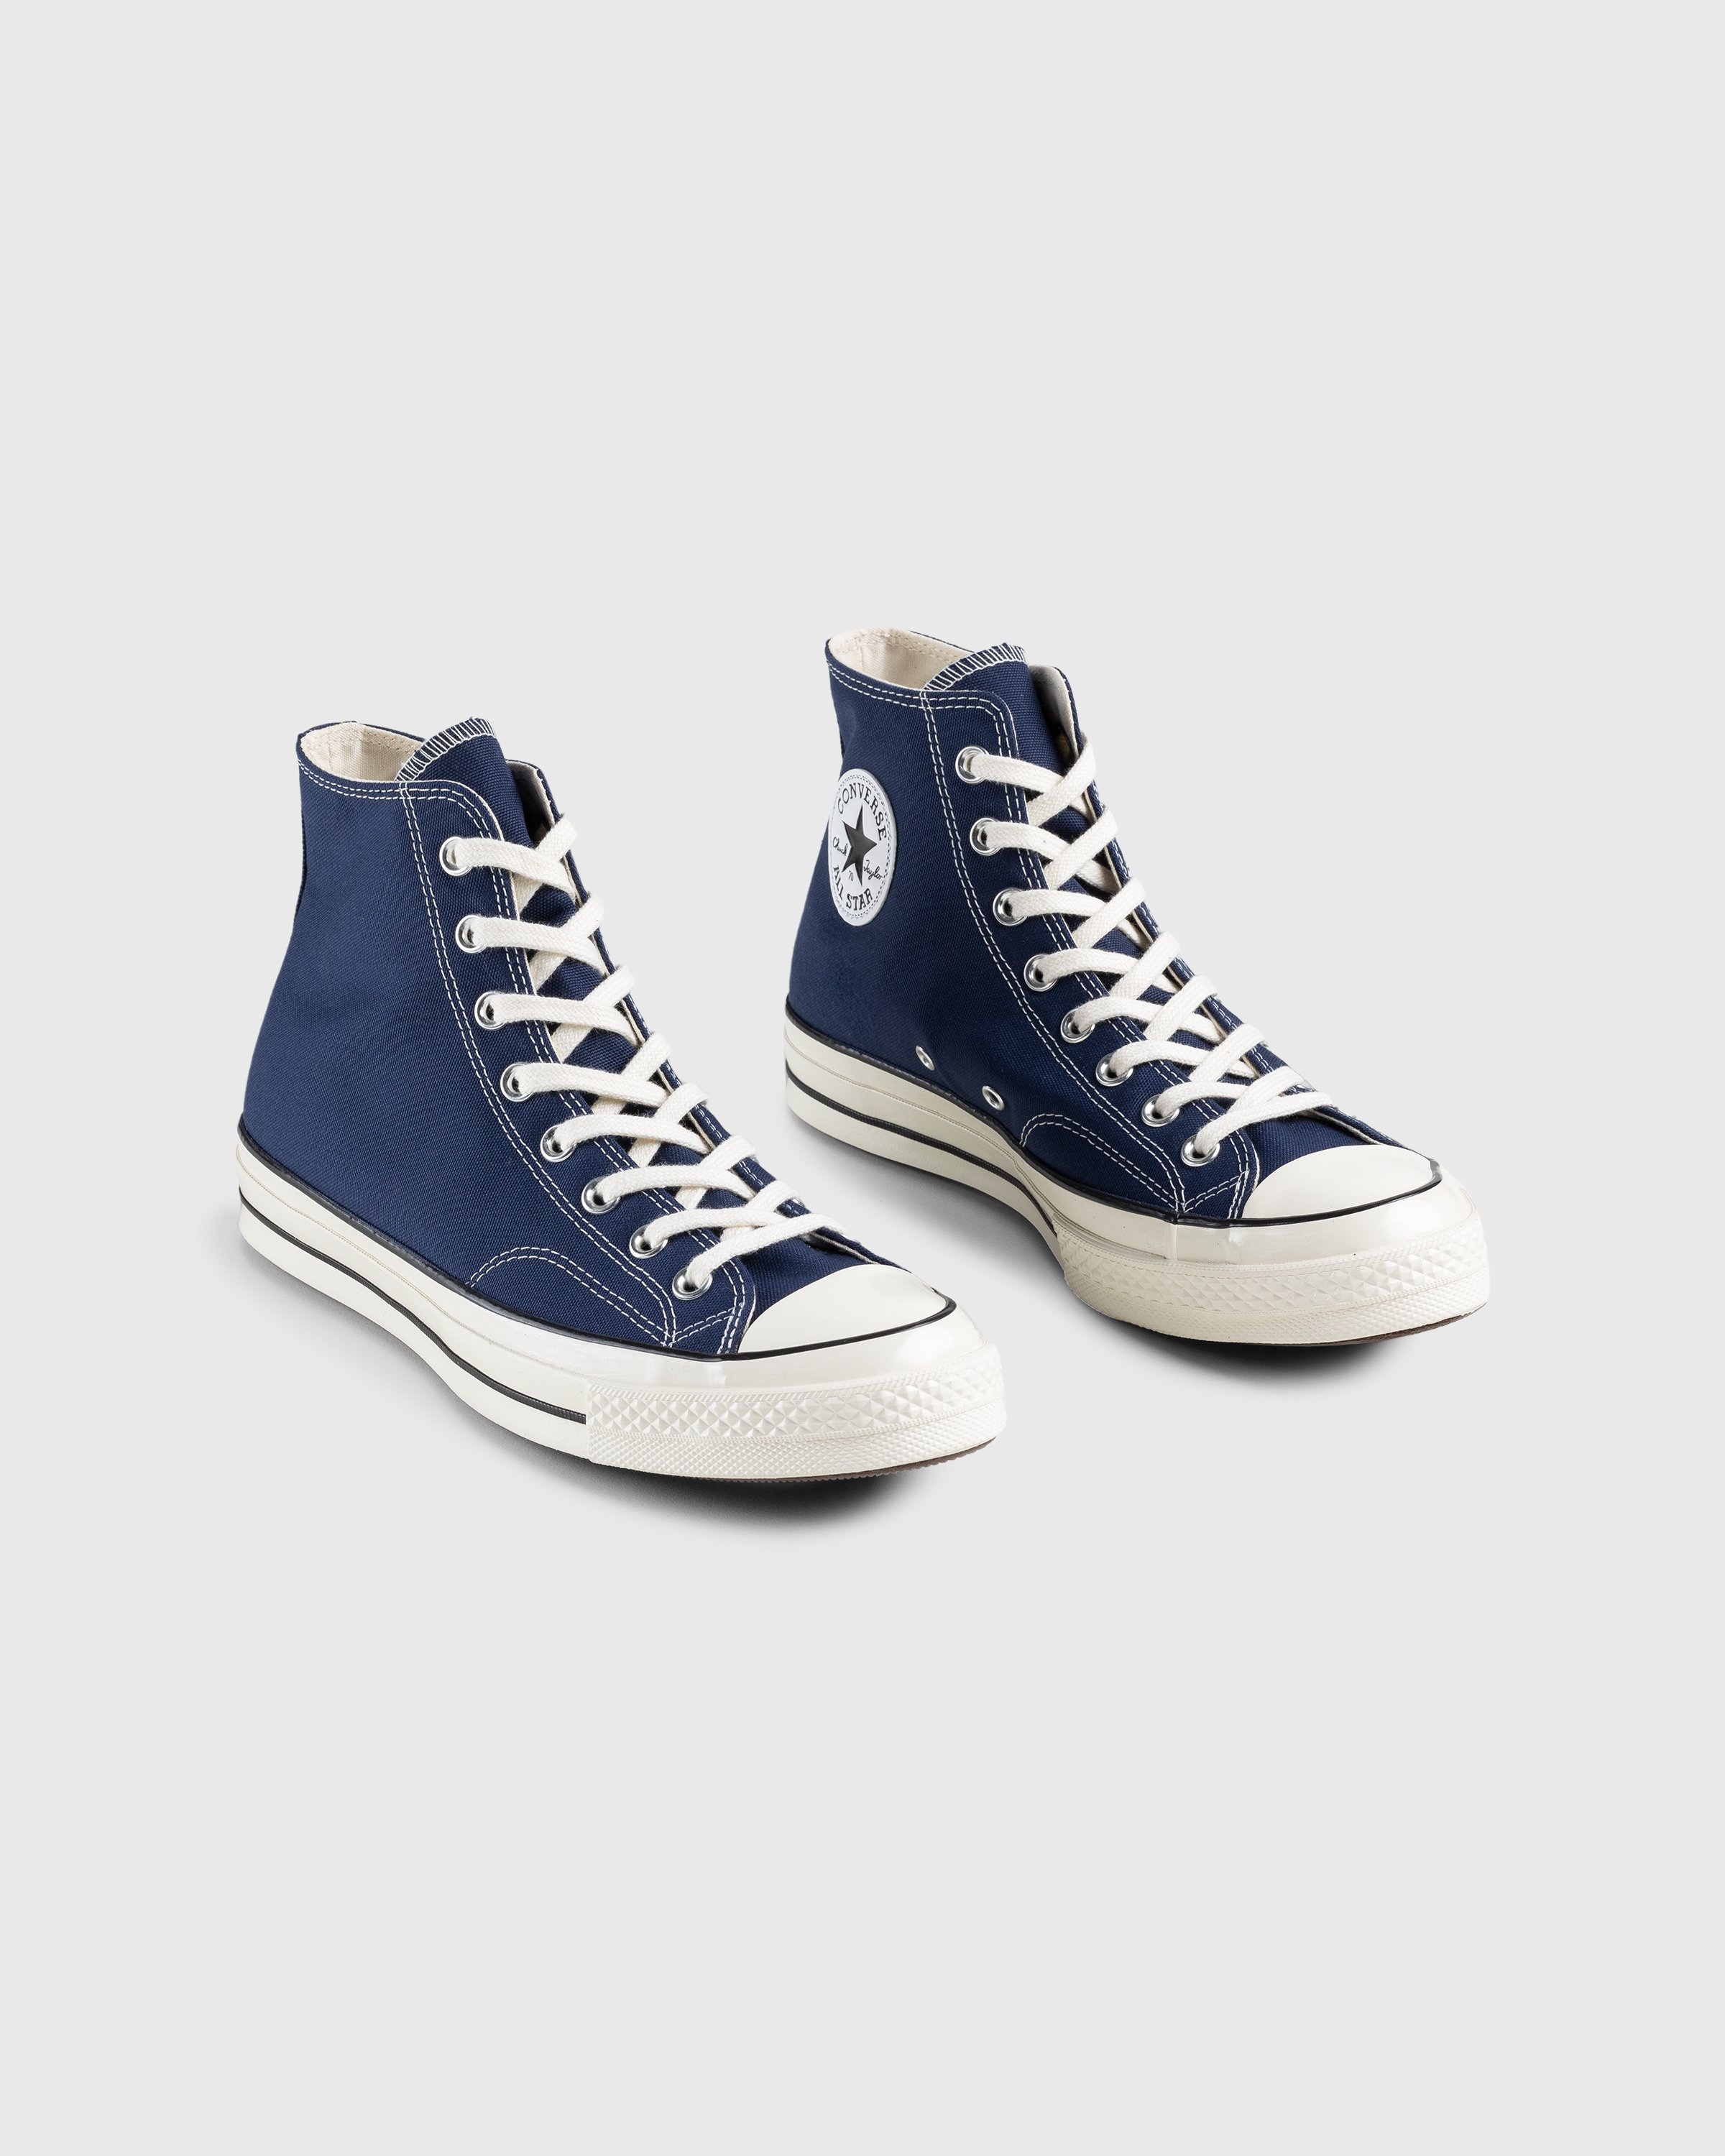 Converse - Chuck 70 Hi Midnight Navy/Egret/Black - Footwear - Blue - Image 3